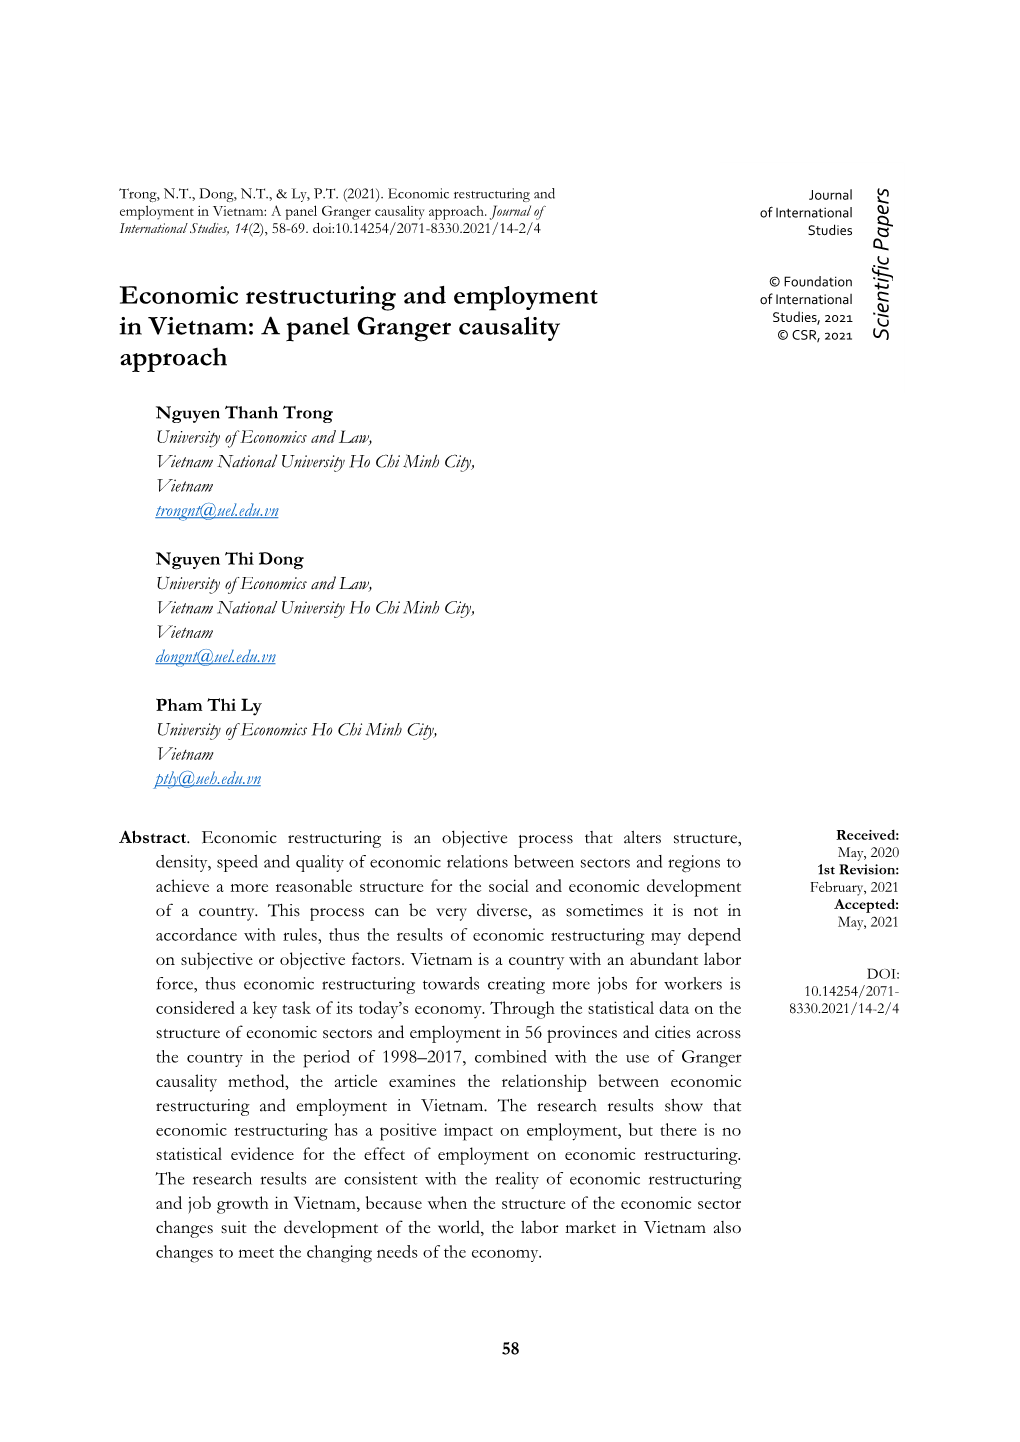 Economic Restructuring and Employment in Vietnam